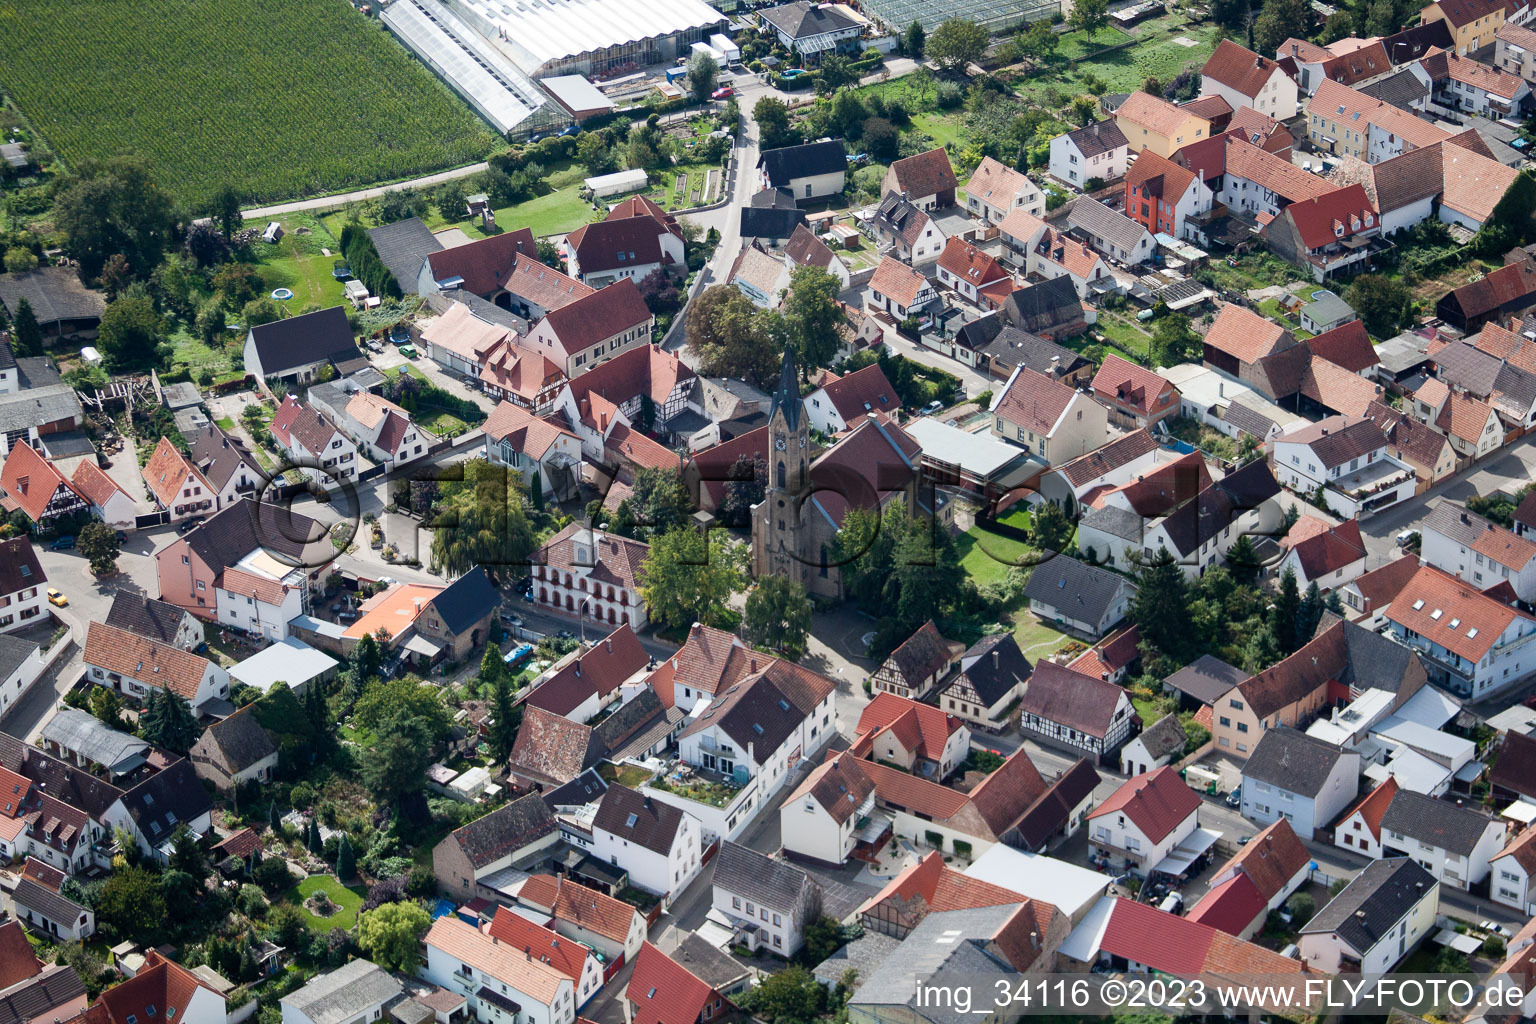 Drone image of District Sondernheim in Germersheim in the state Rhineland-Palatinate, Germany